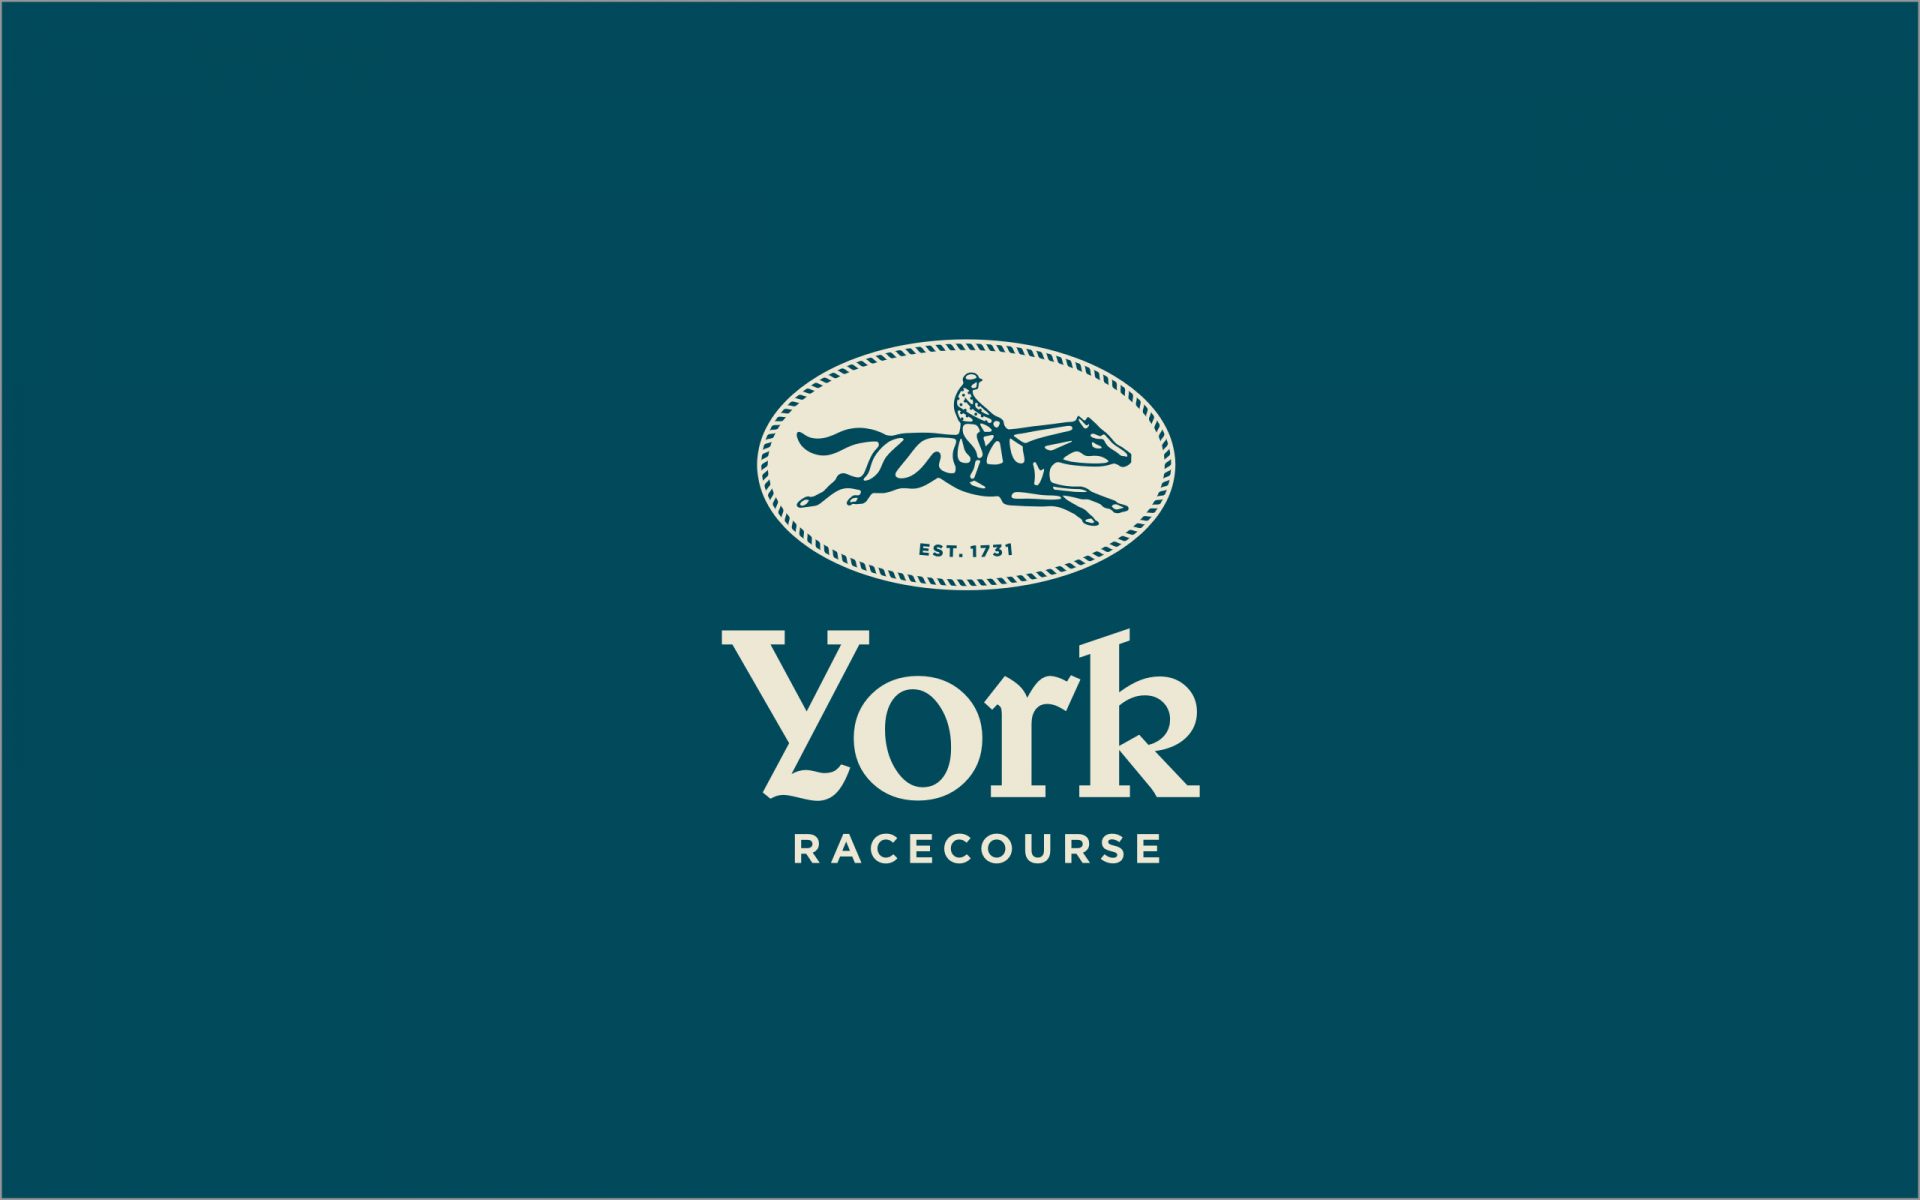  York Racecourse